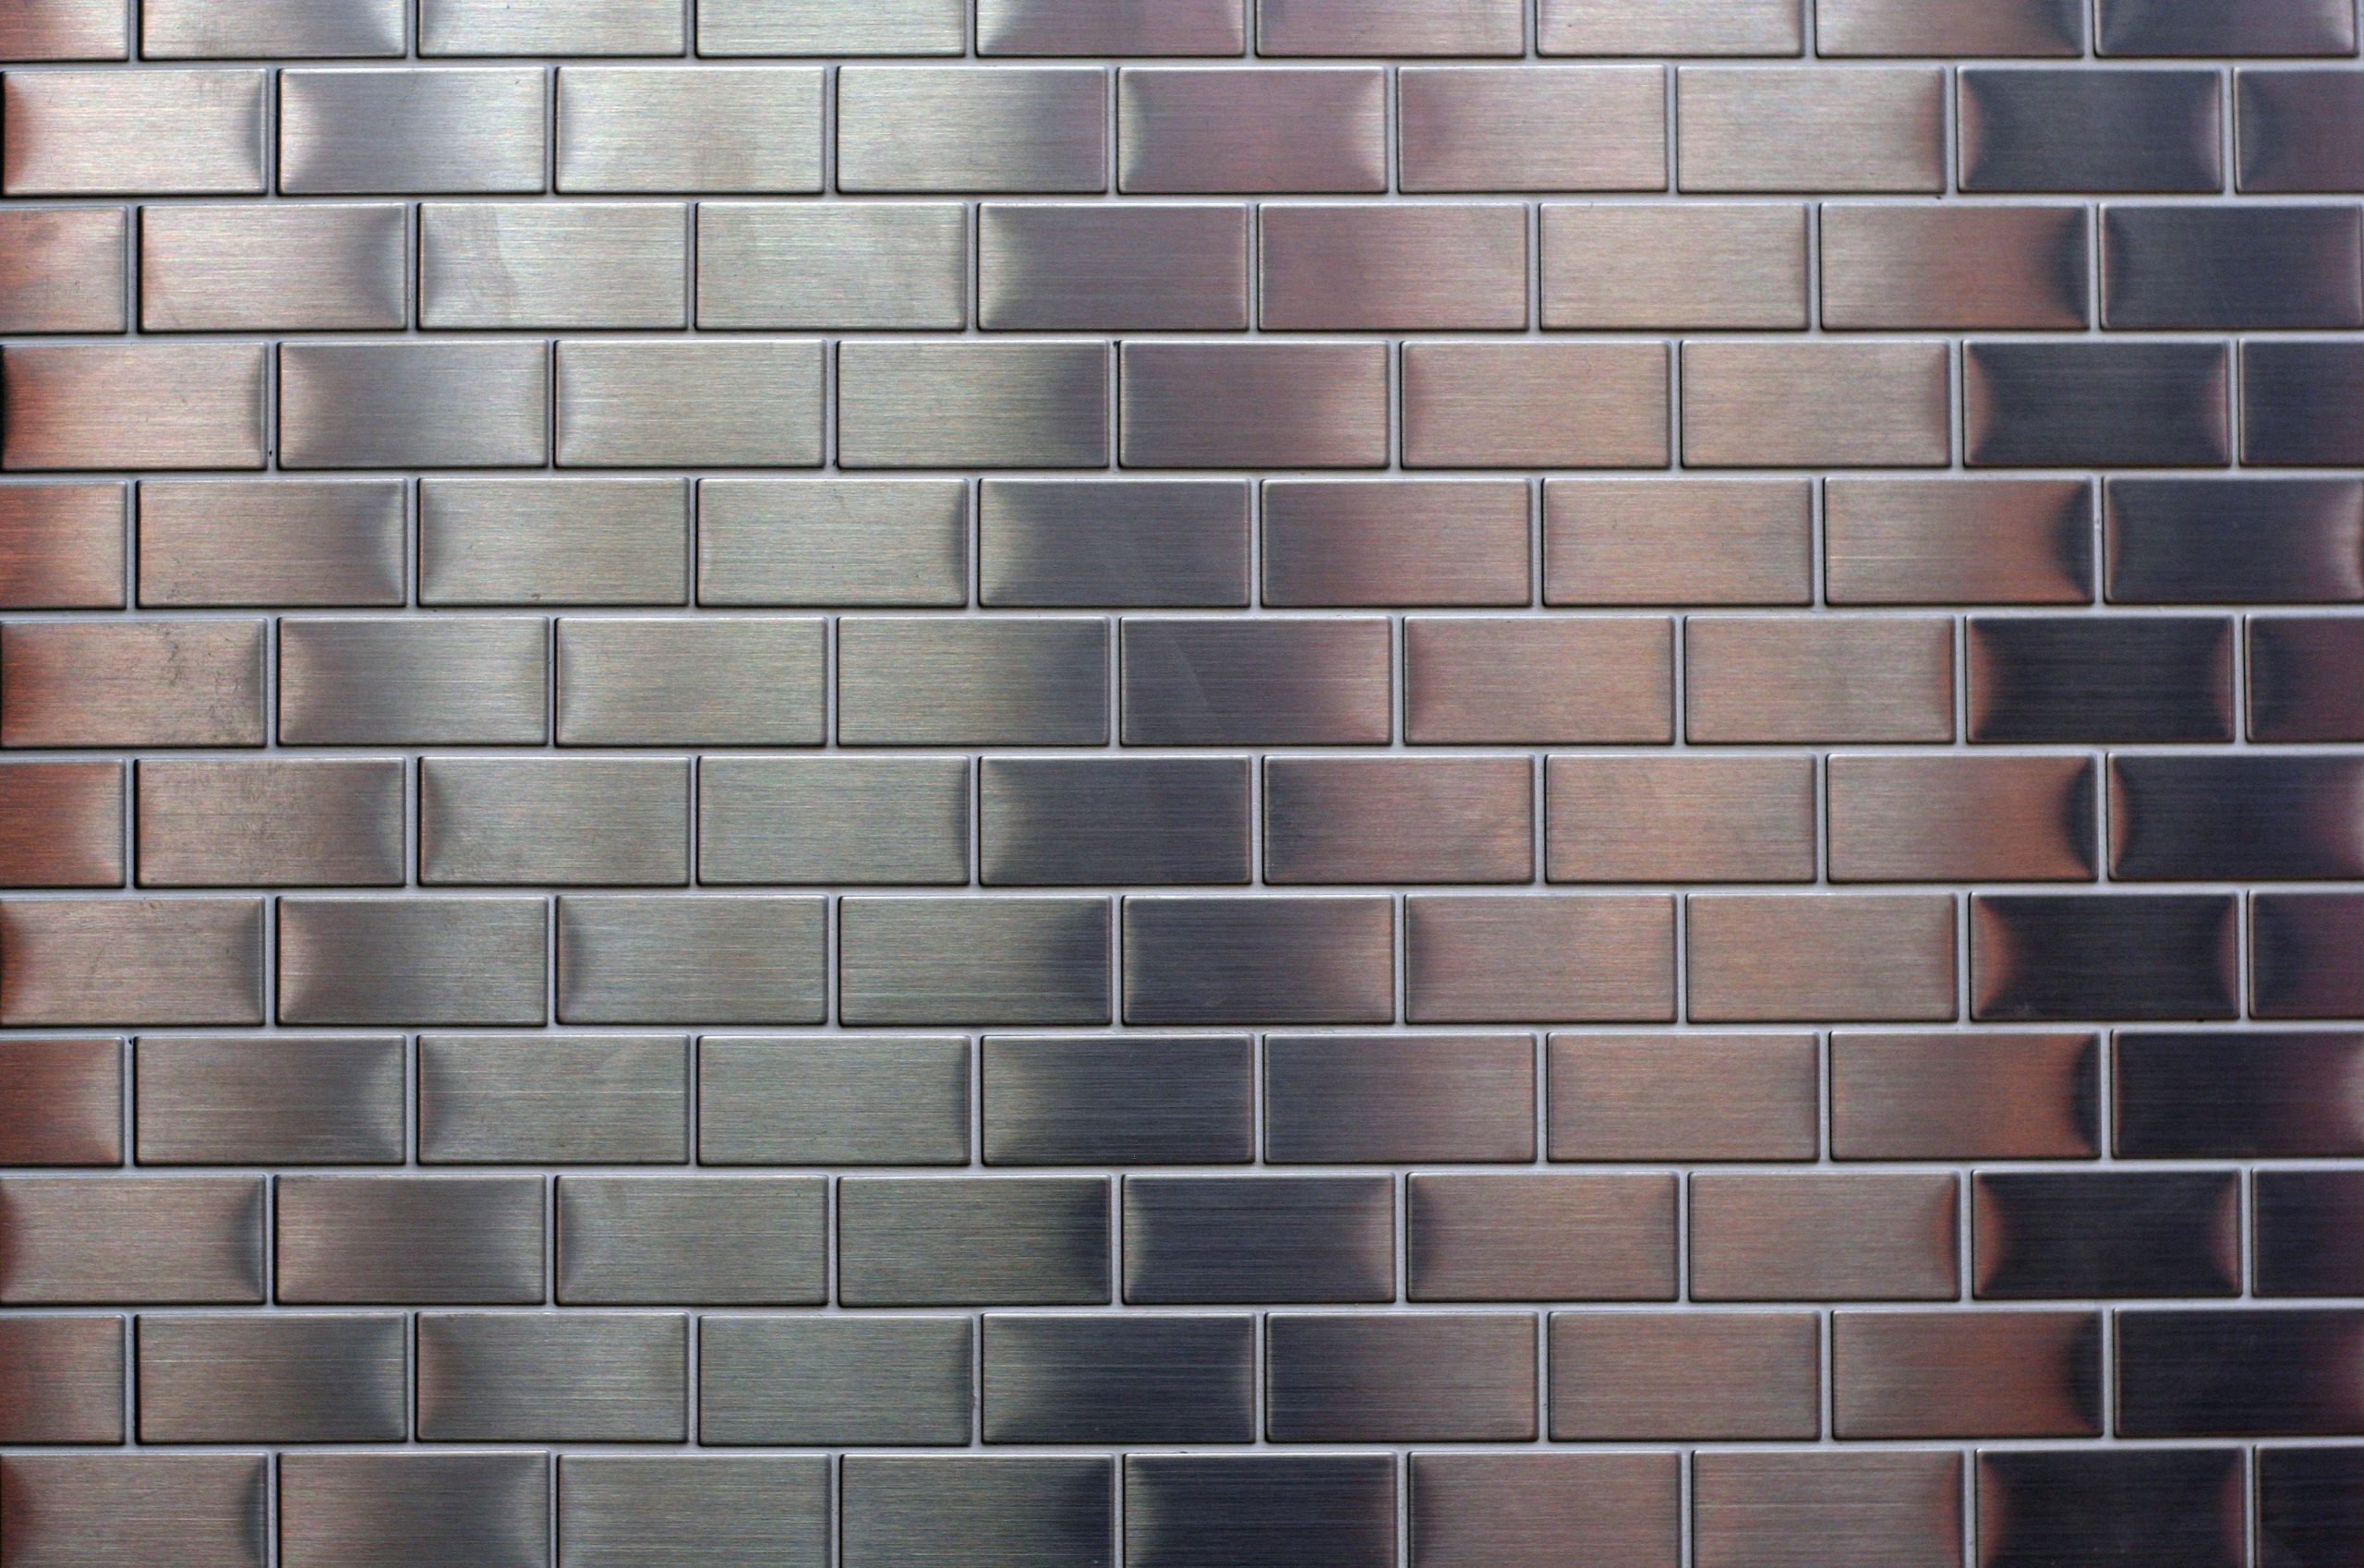 Metallic finish tiles